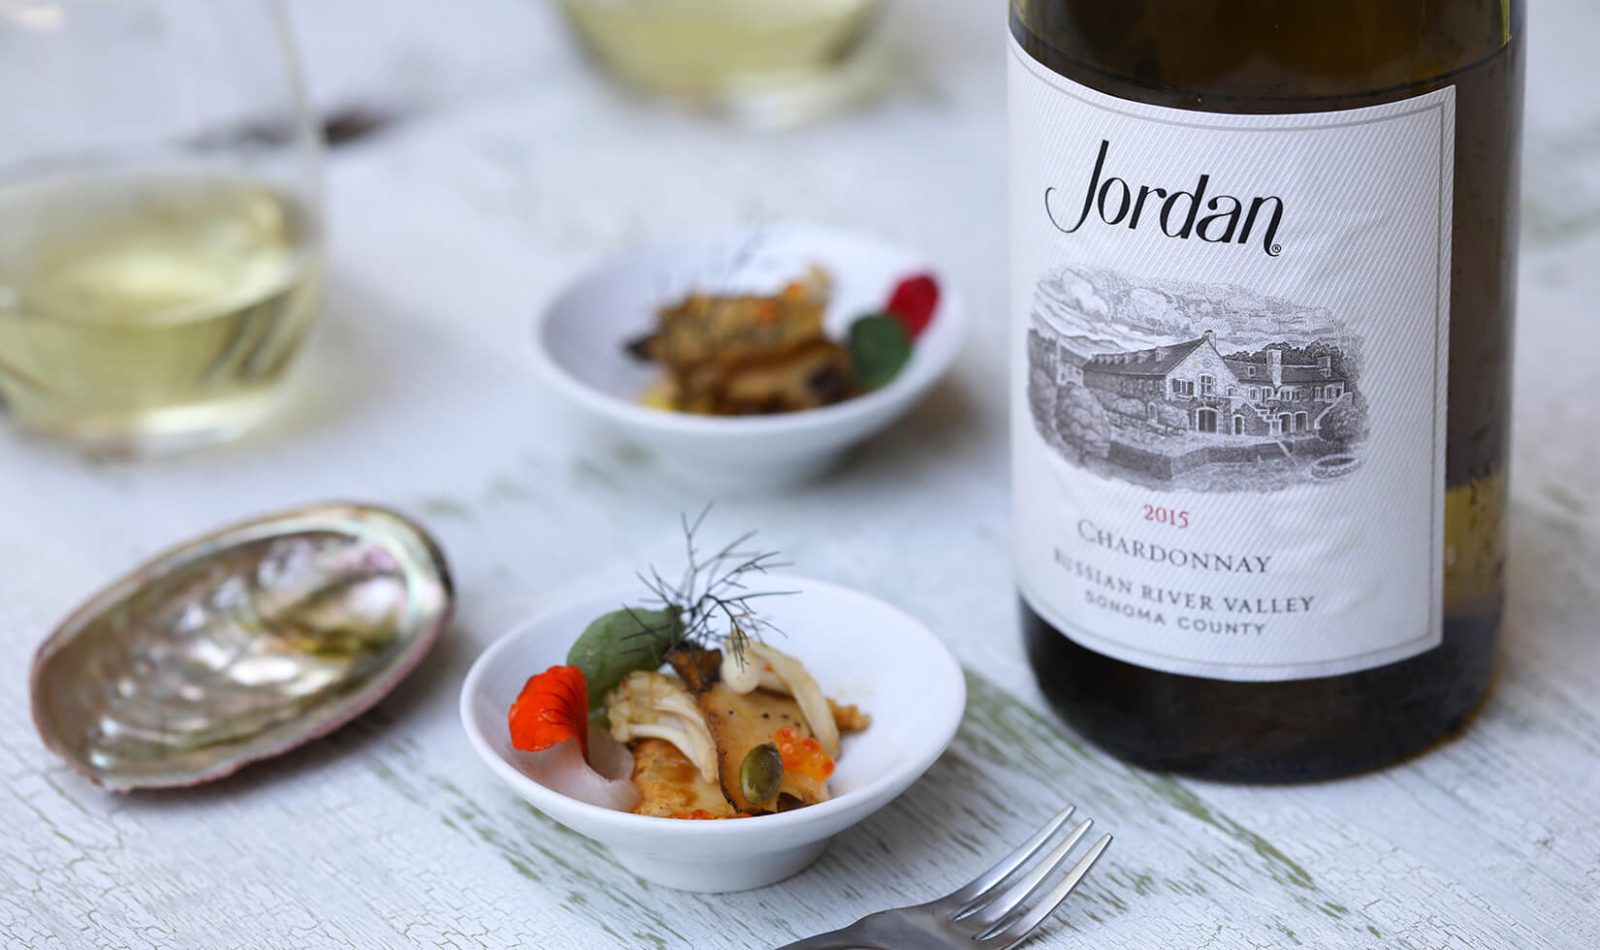 abalone food bite next to a bottle of Jordan Chardonnay